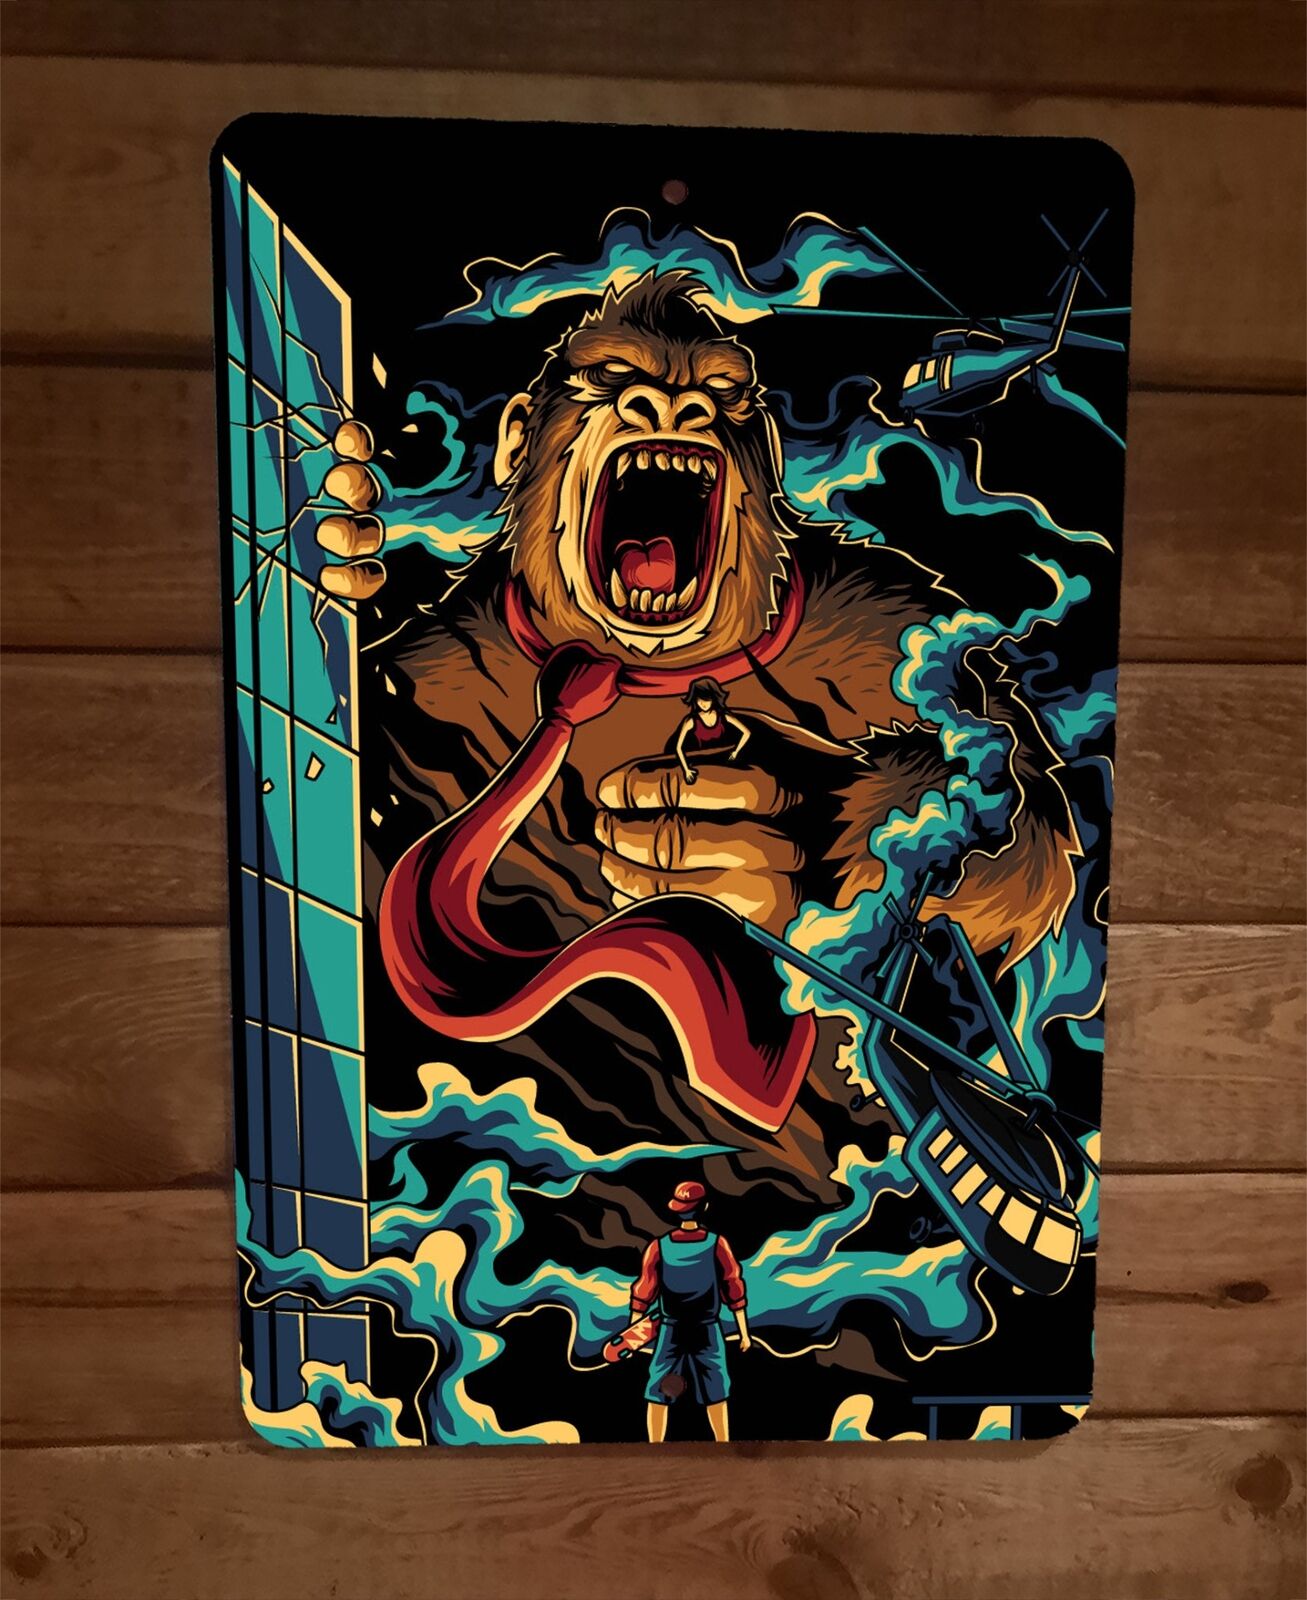 King Donkey Kong 8x12 Metal Wall Sign